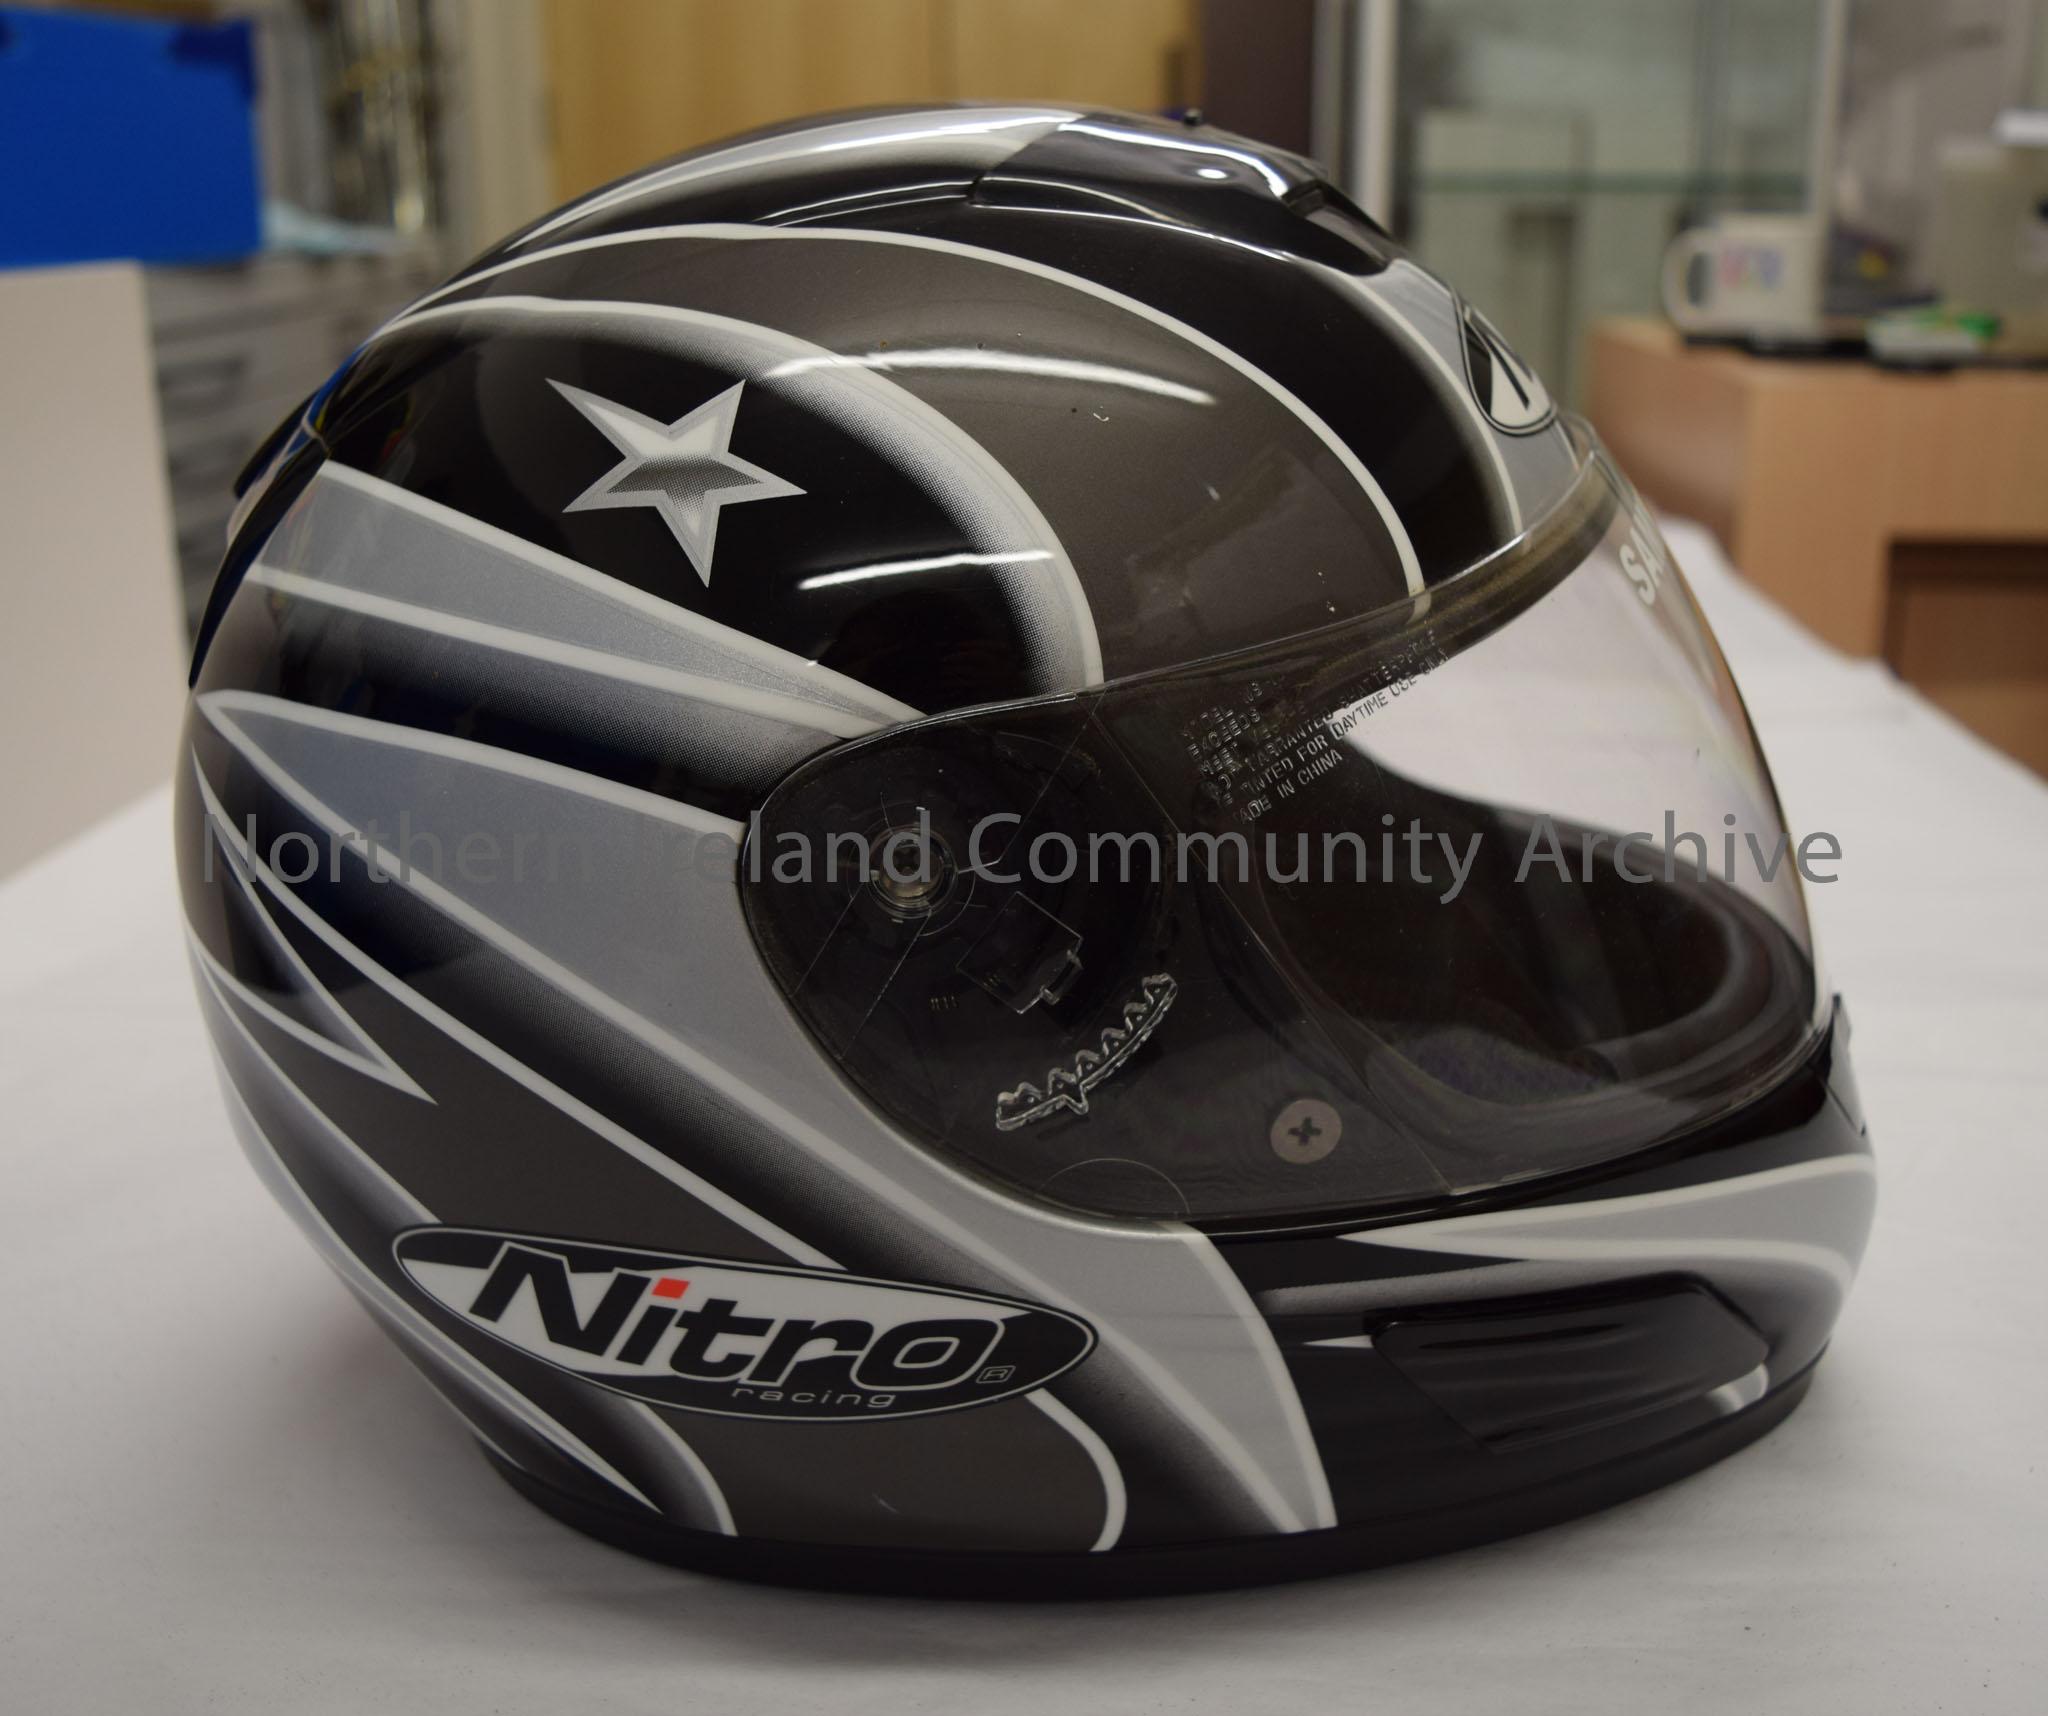 Helmet with Sammy Bentley written on it. Black with white and silver/grey art. Nitro Racing helmet. – 2016.33 (5)